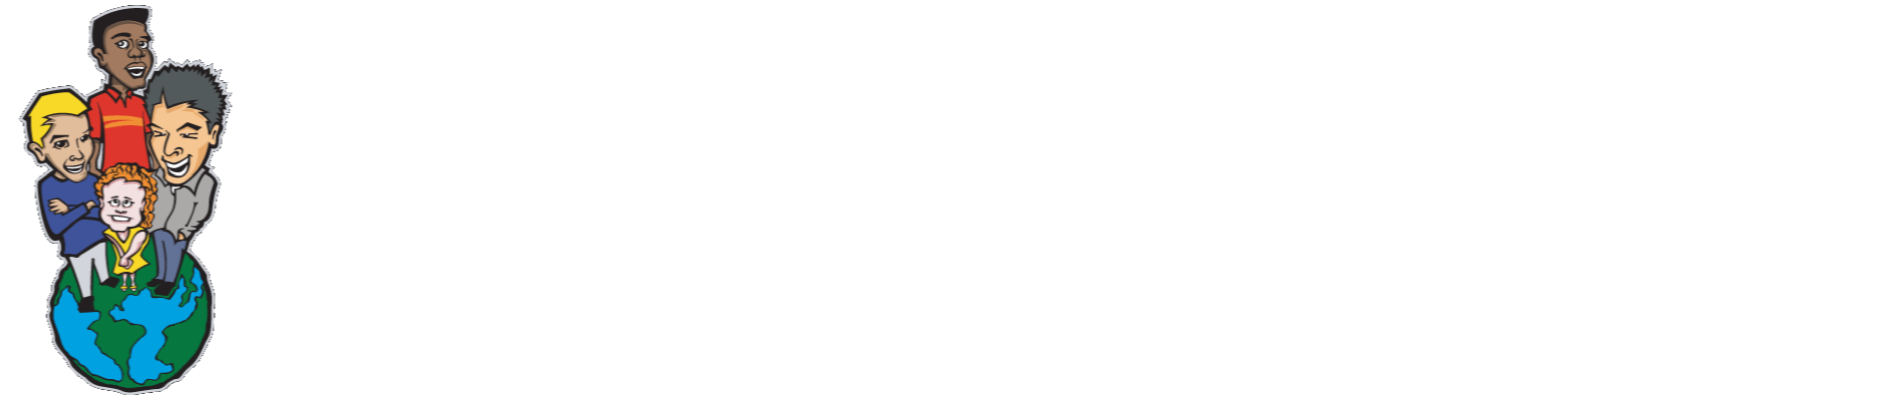 JT Enterprises School Fundraising